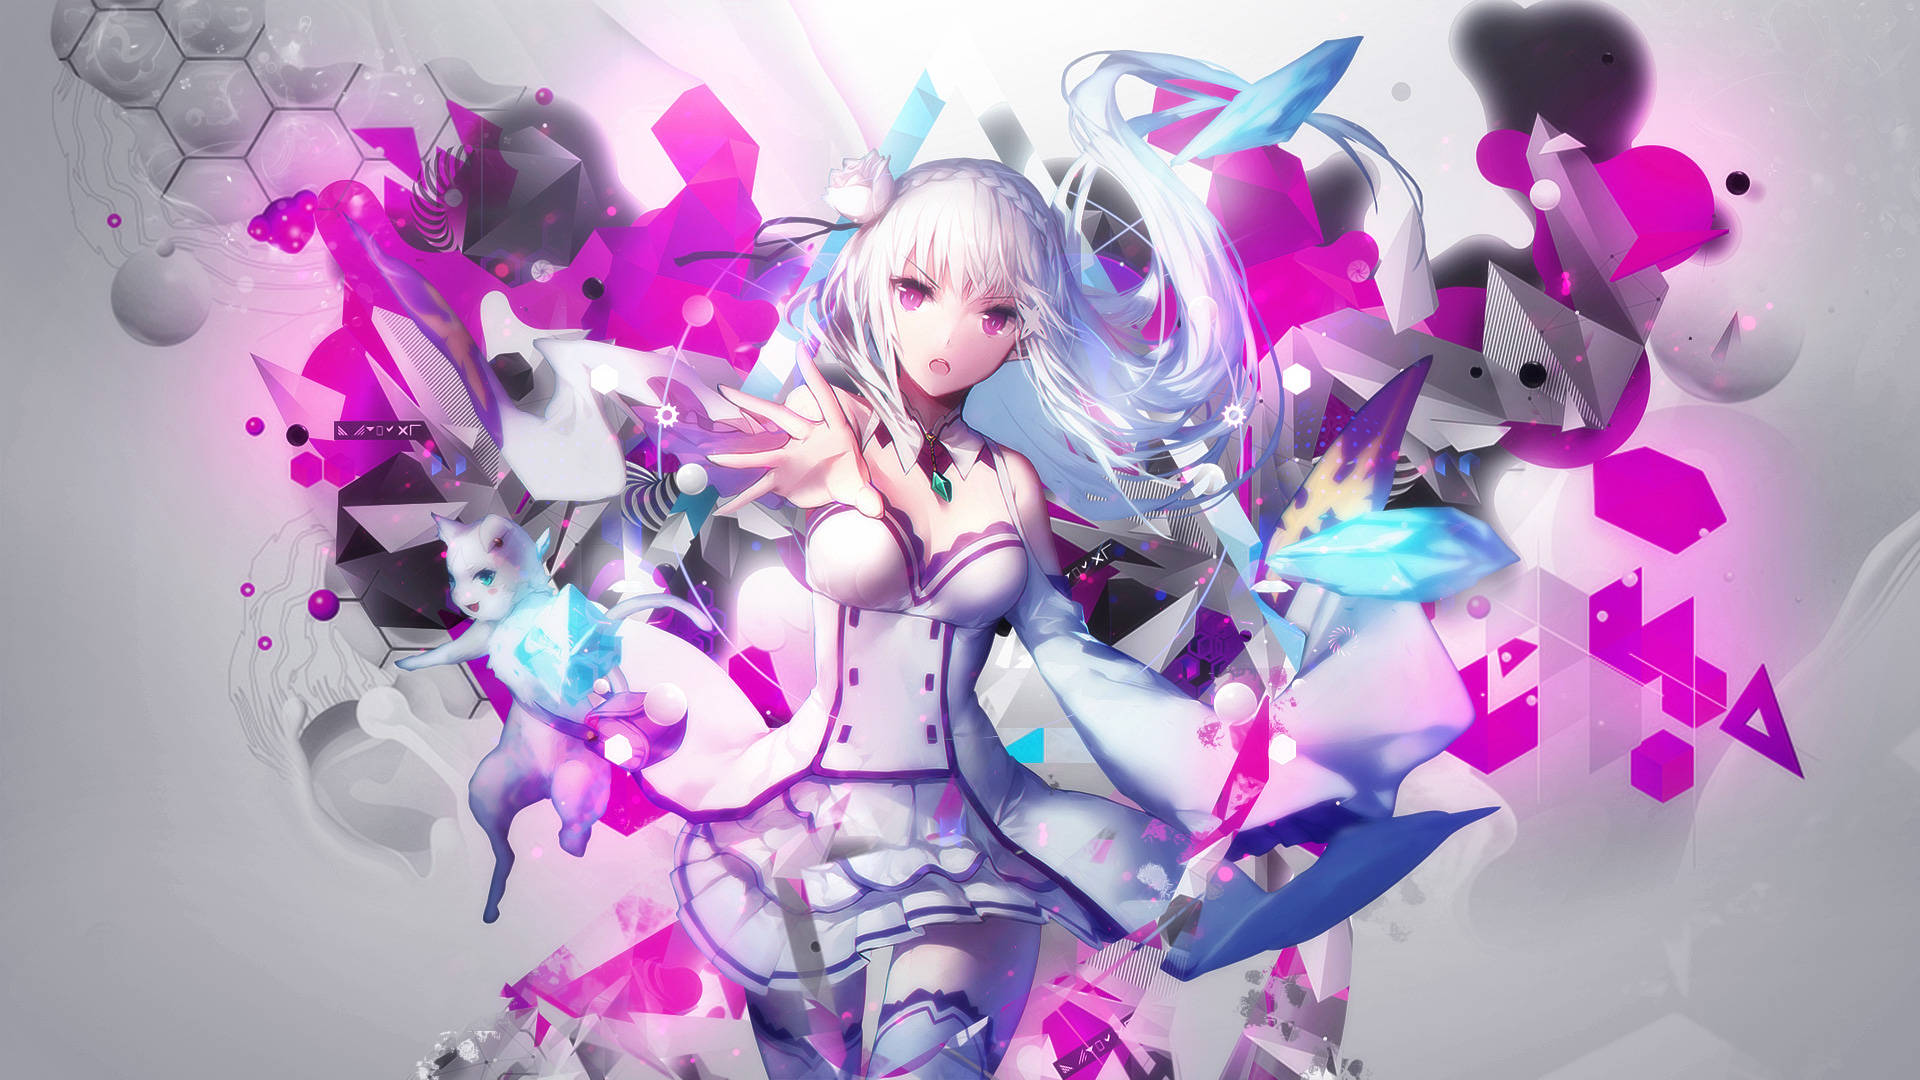 Coolest Hd Artwork Emilia Of Re Zero Background